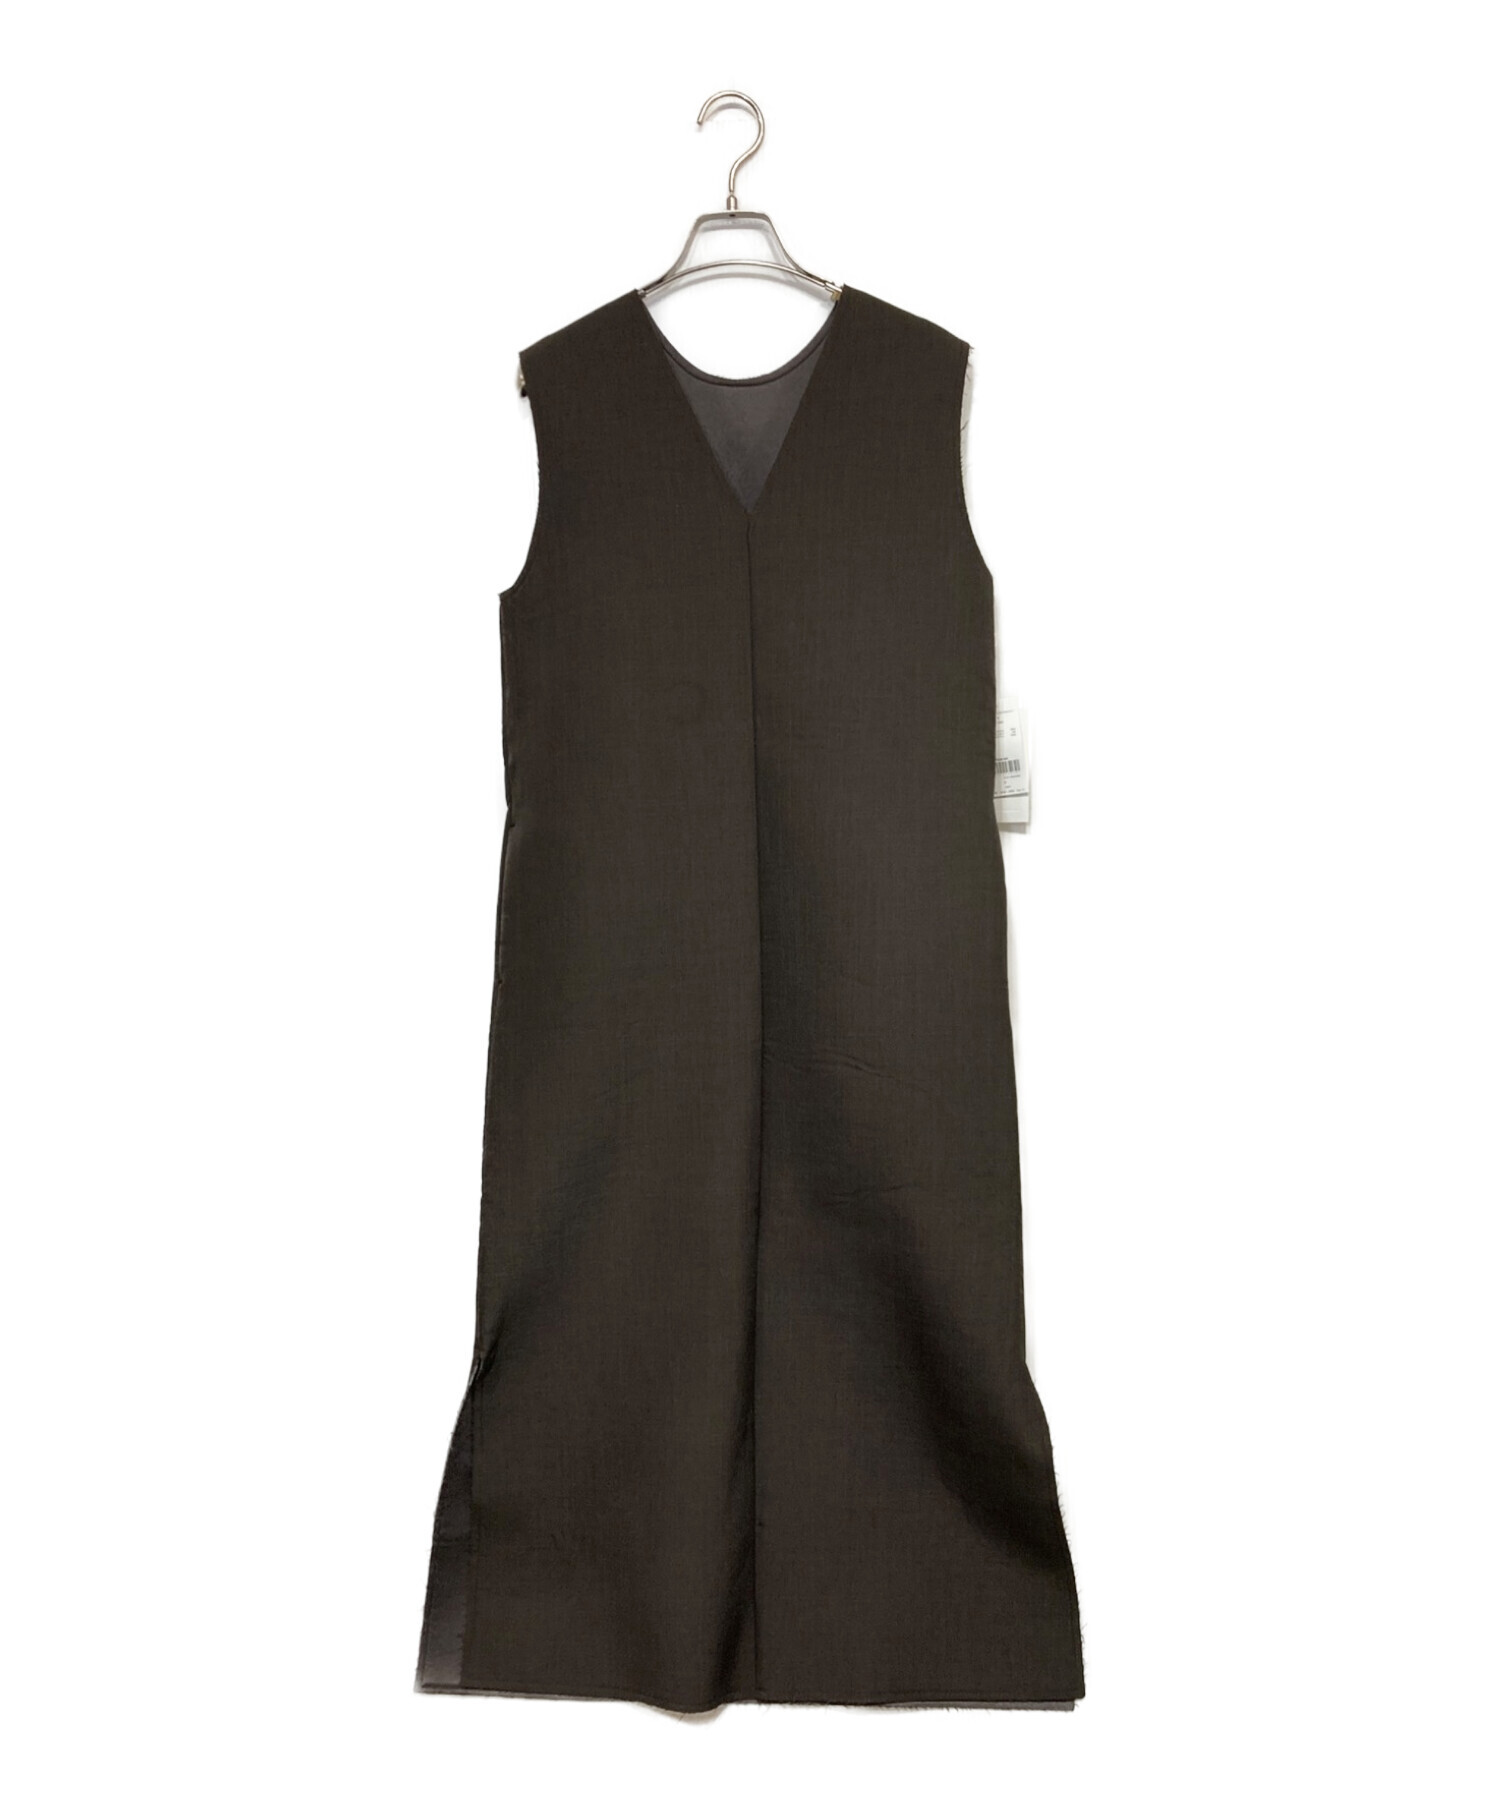 Ameri (アメリ) 2WAY SPONGE SHIFT DRESS ワンピース ブラウン サイズ:S